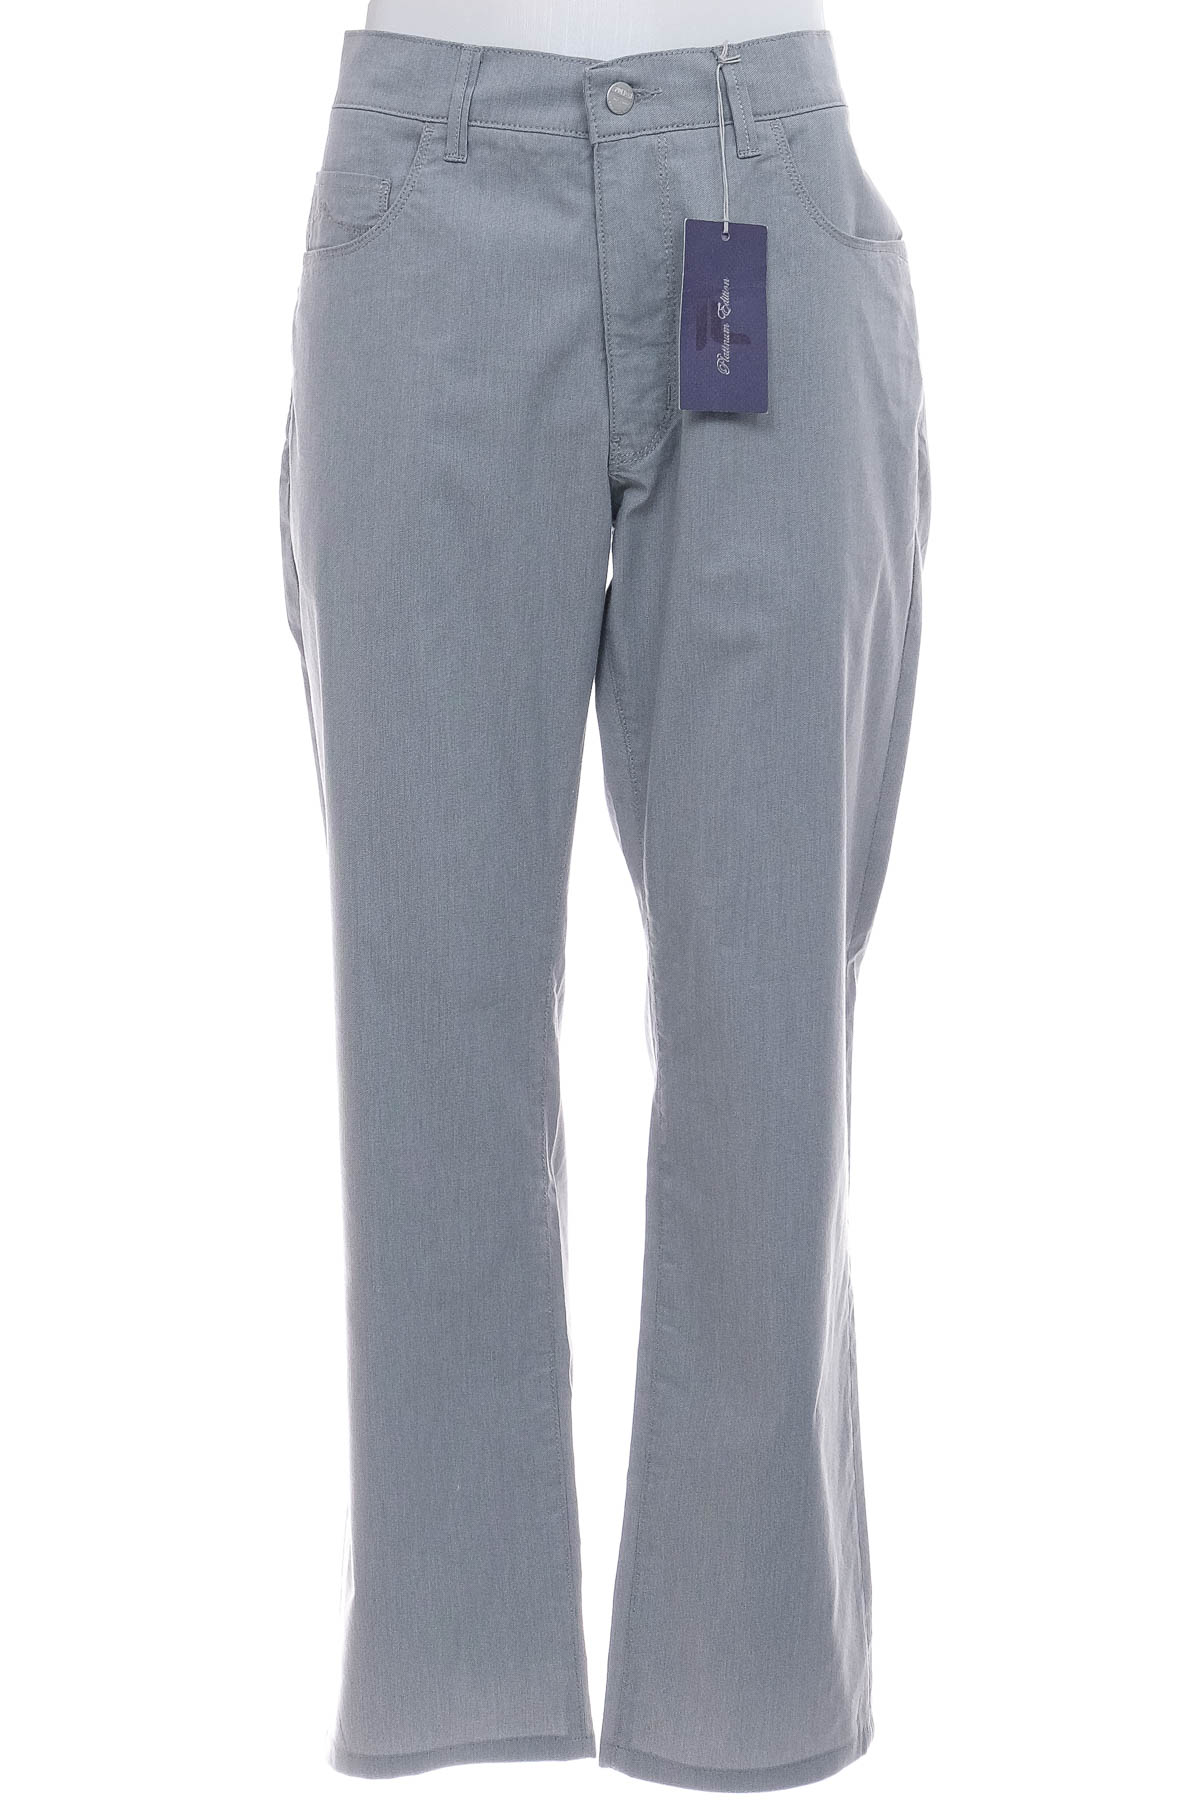 Pantalon pentru bărbați - Pioneer - 0